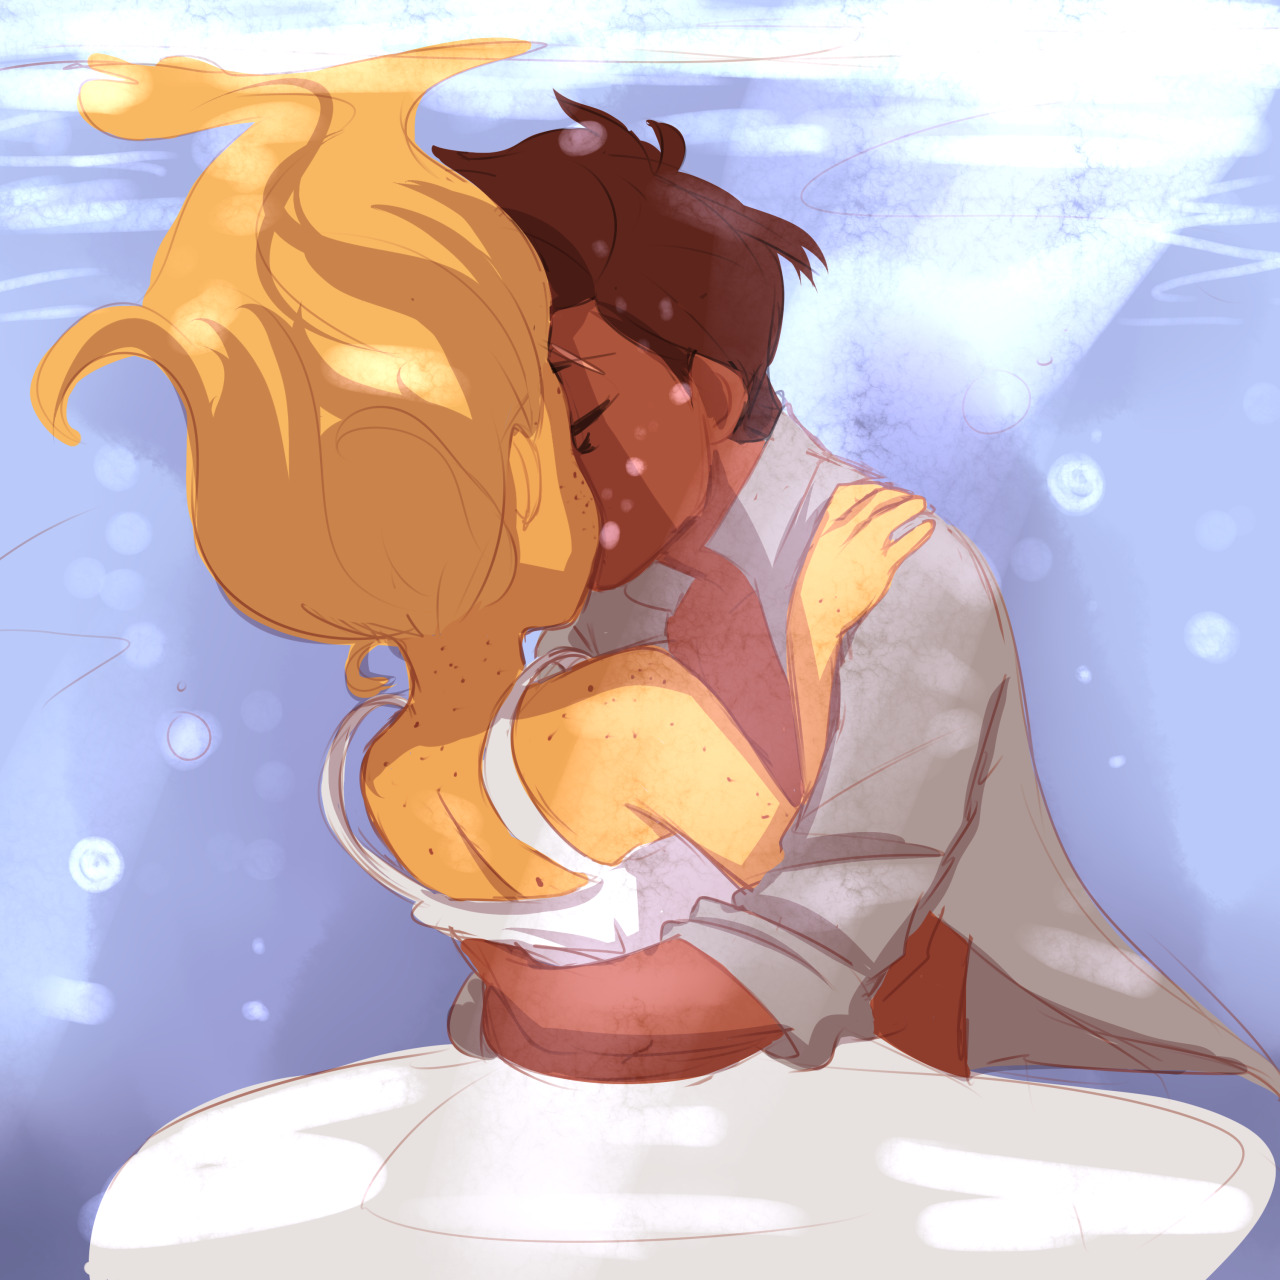 Glass Heart — obligatory underwater kiss